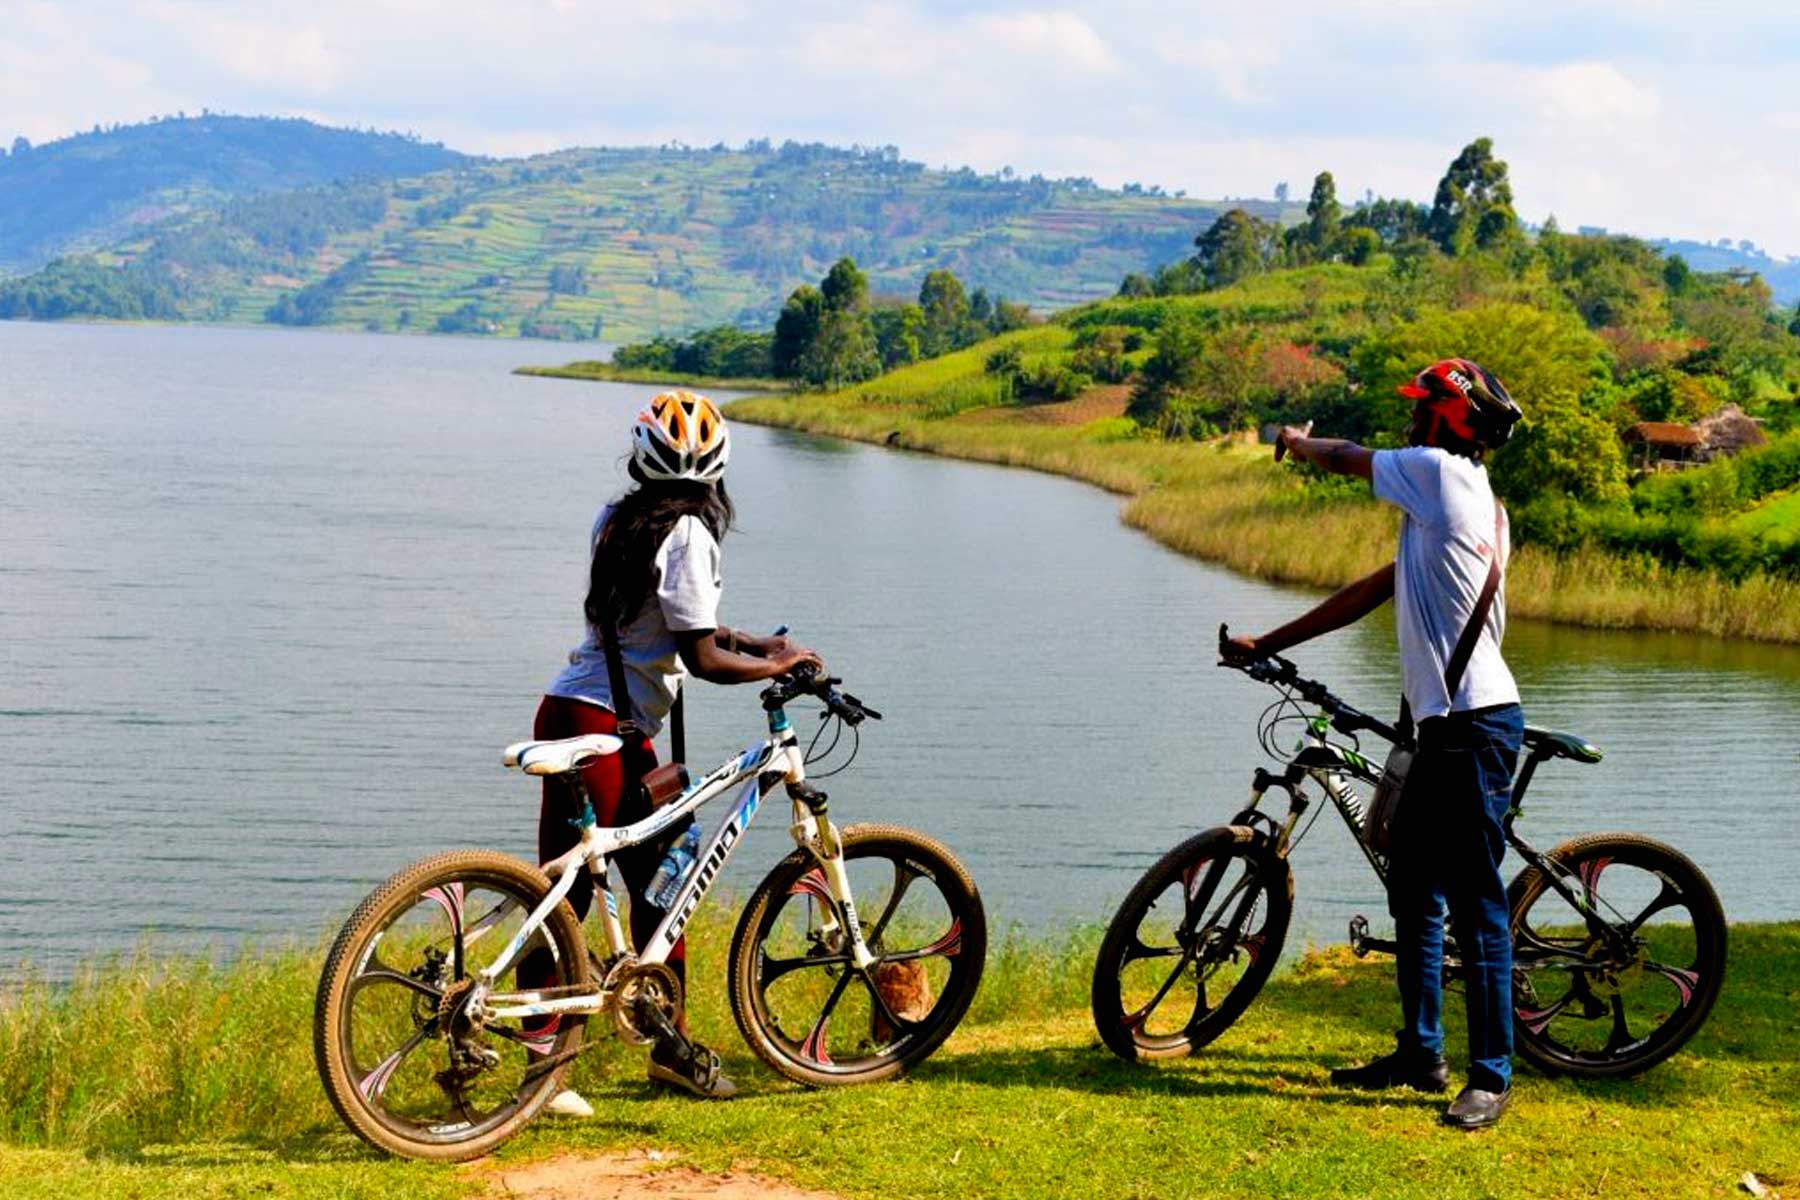 Cycling expeditions around Lake Bunyonyi